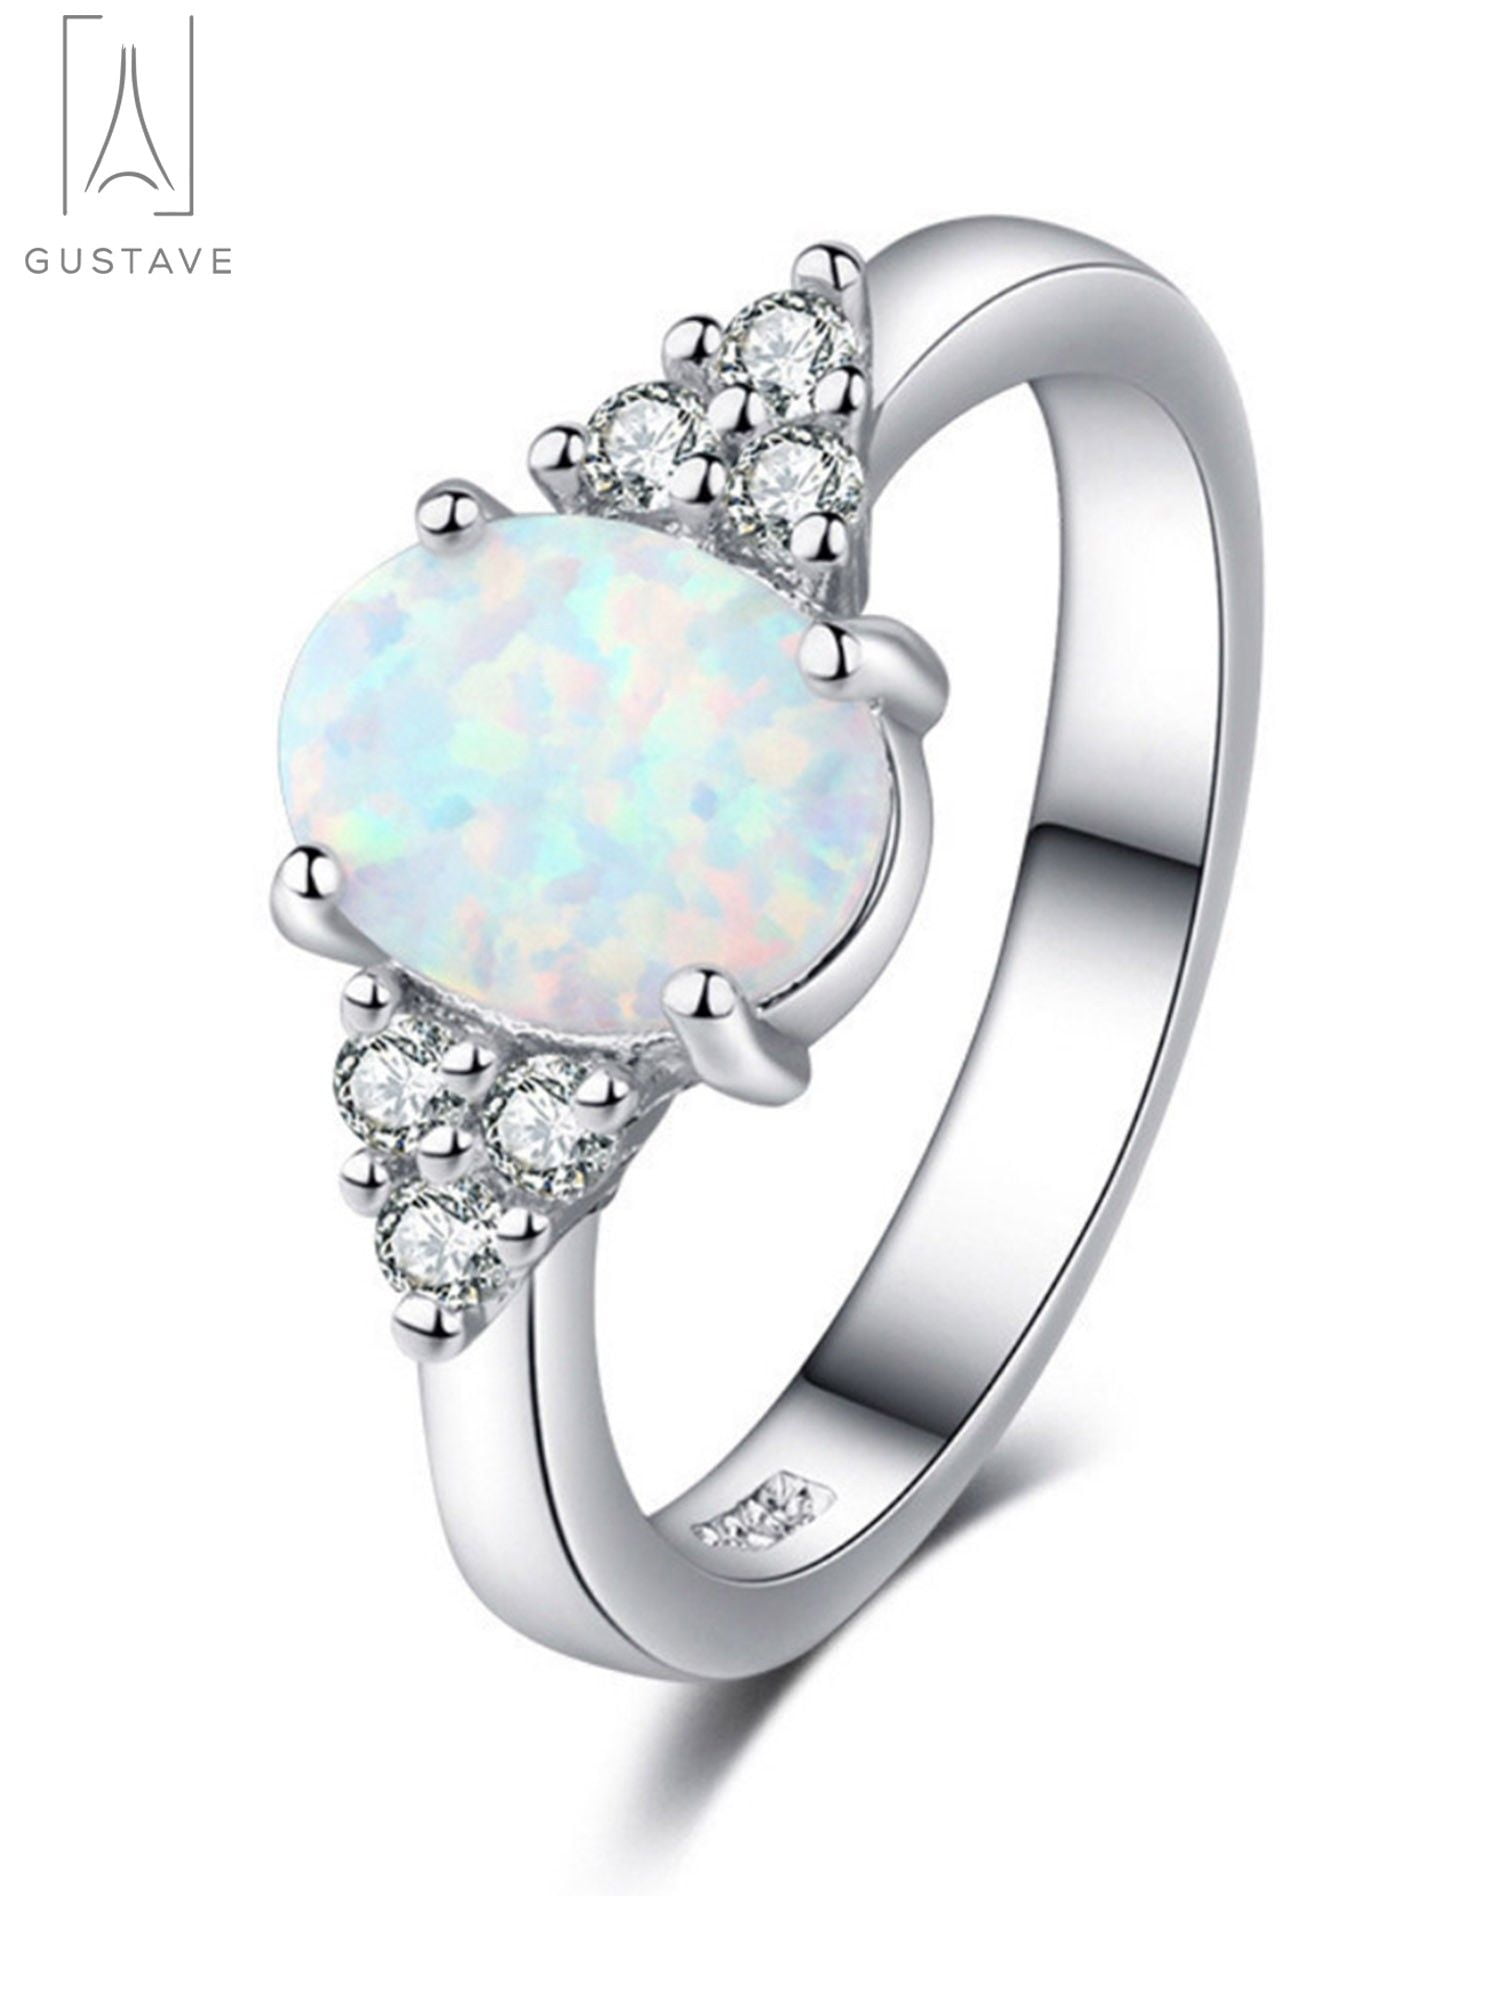 Wedding Flower Shaped Fire Opal White Topaz Gems Silver Woman Ring US Size 6-10 